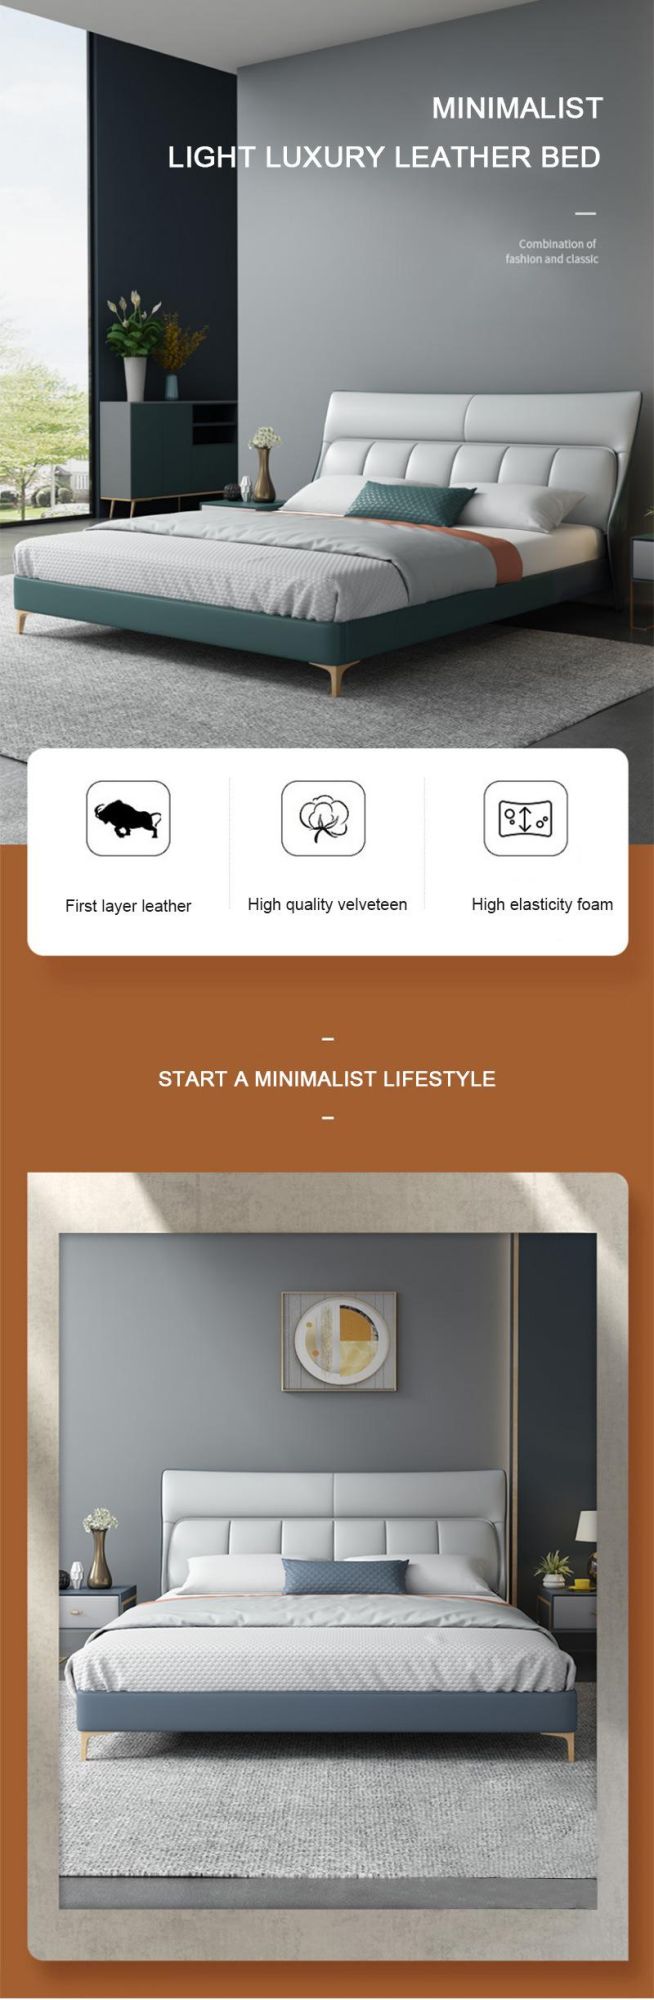 Modern Bedroom Sets Furniture Platform King Size Bed with Nightstand